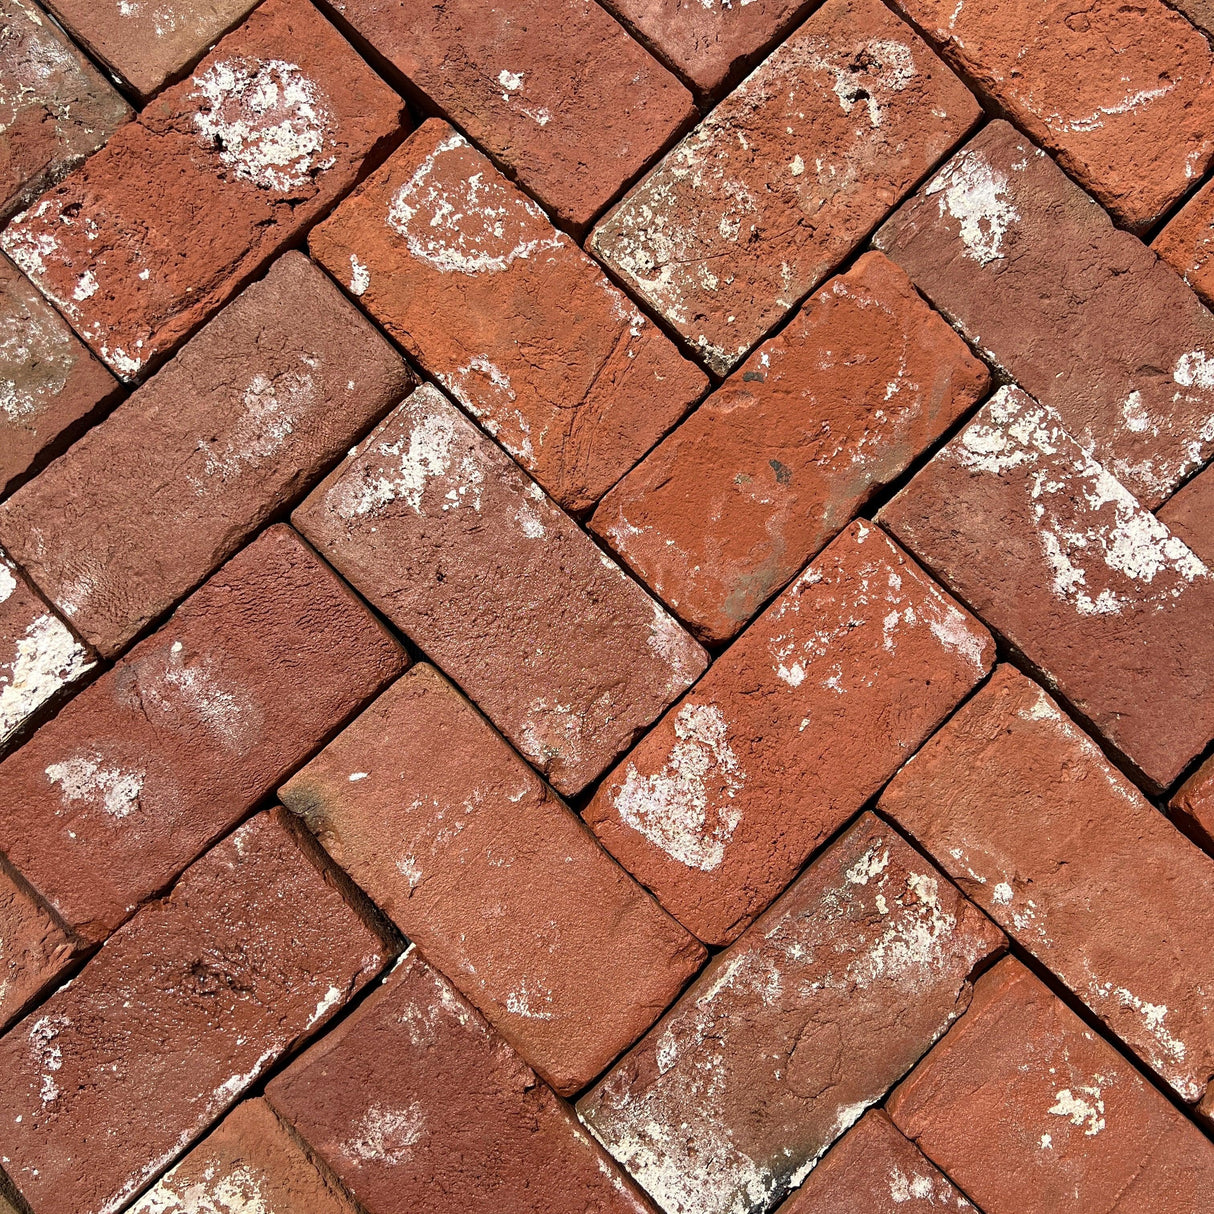 Arundel Red Handmade Clay Paving Brick Paver - Reclaimed Brick Company